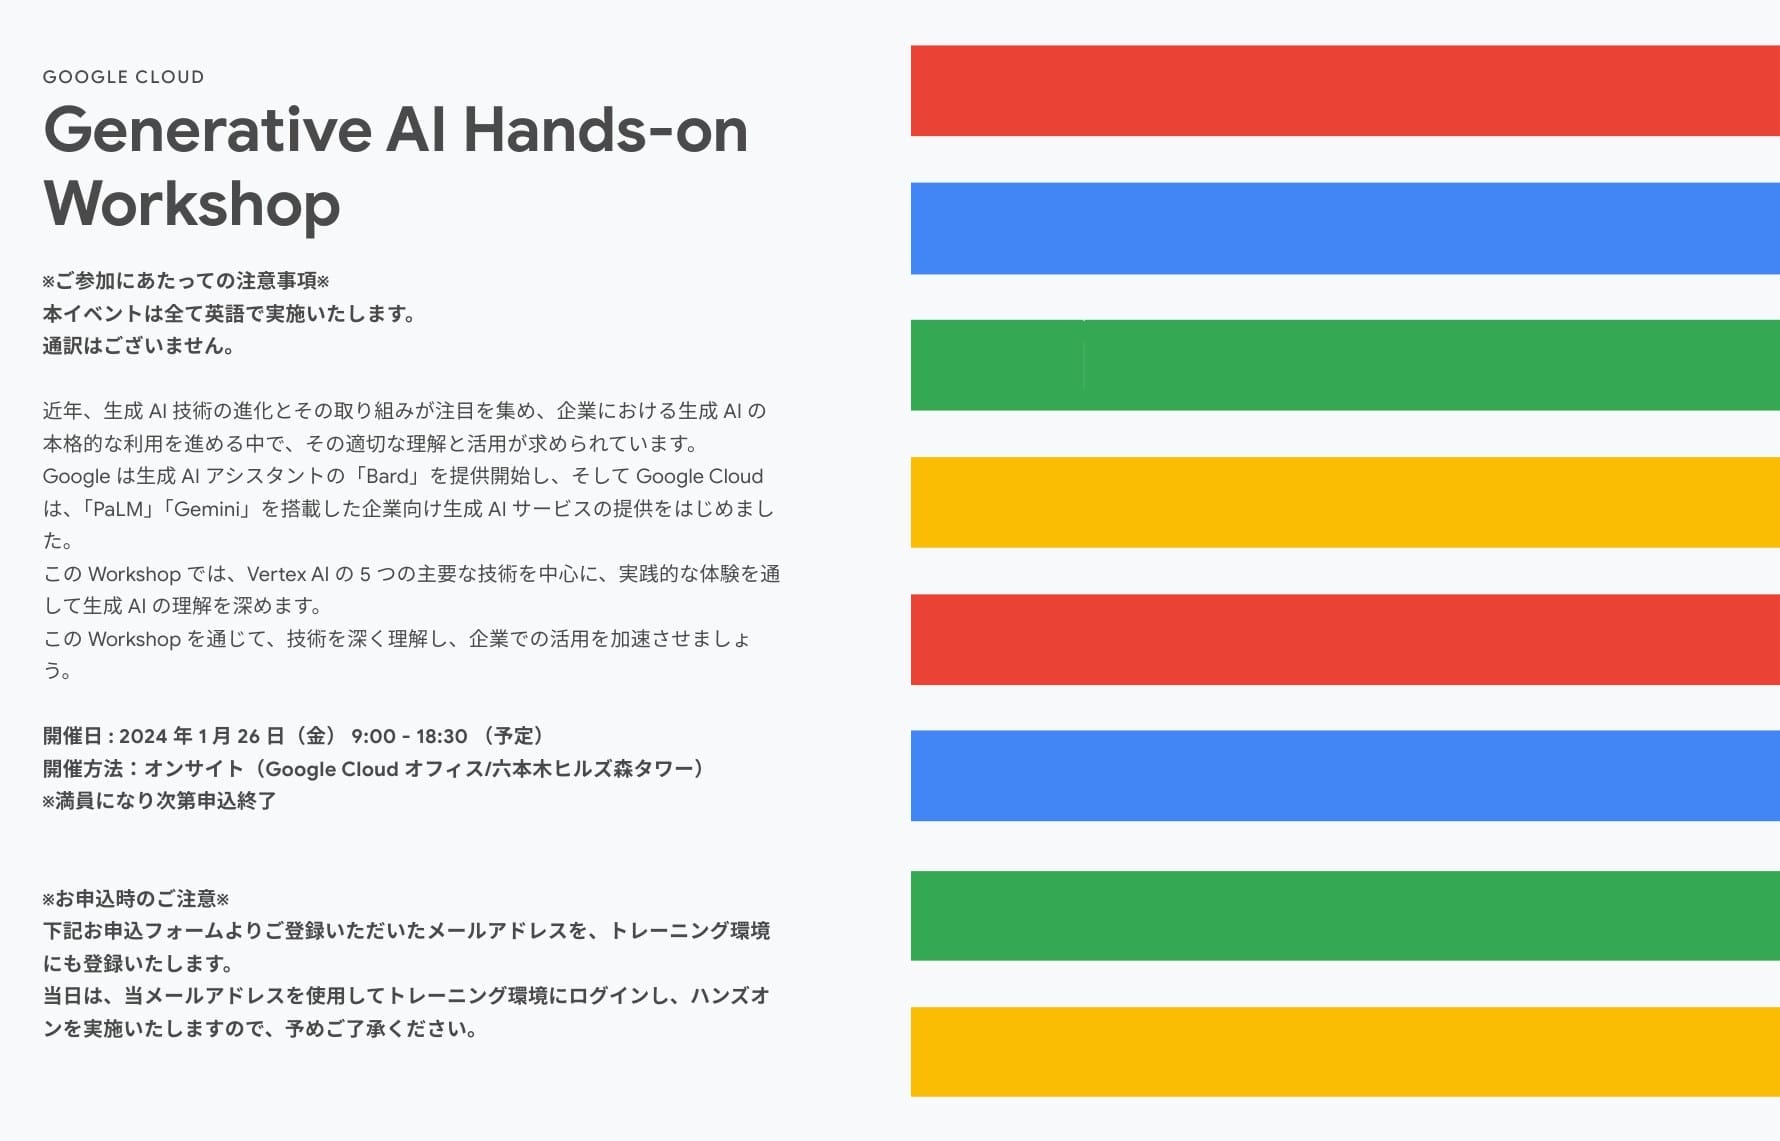 [Google Cloud] Generative AI Hands-on Workshop